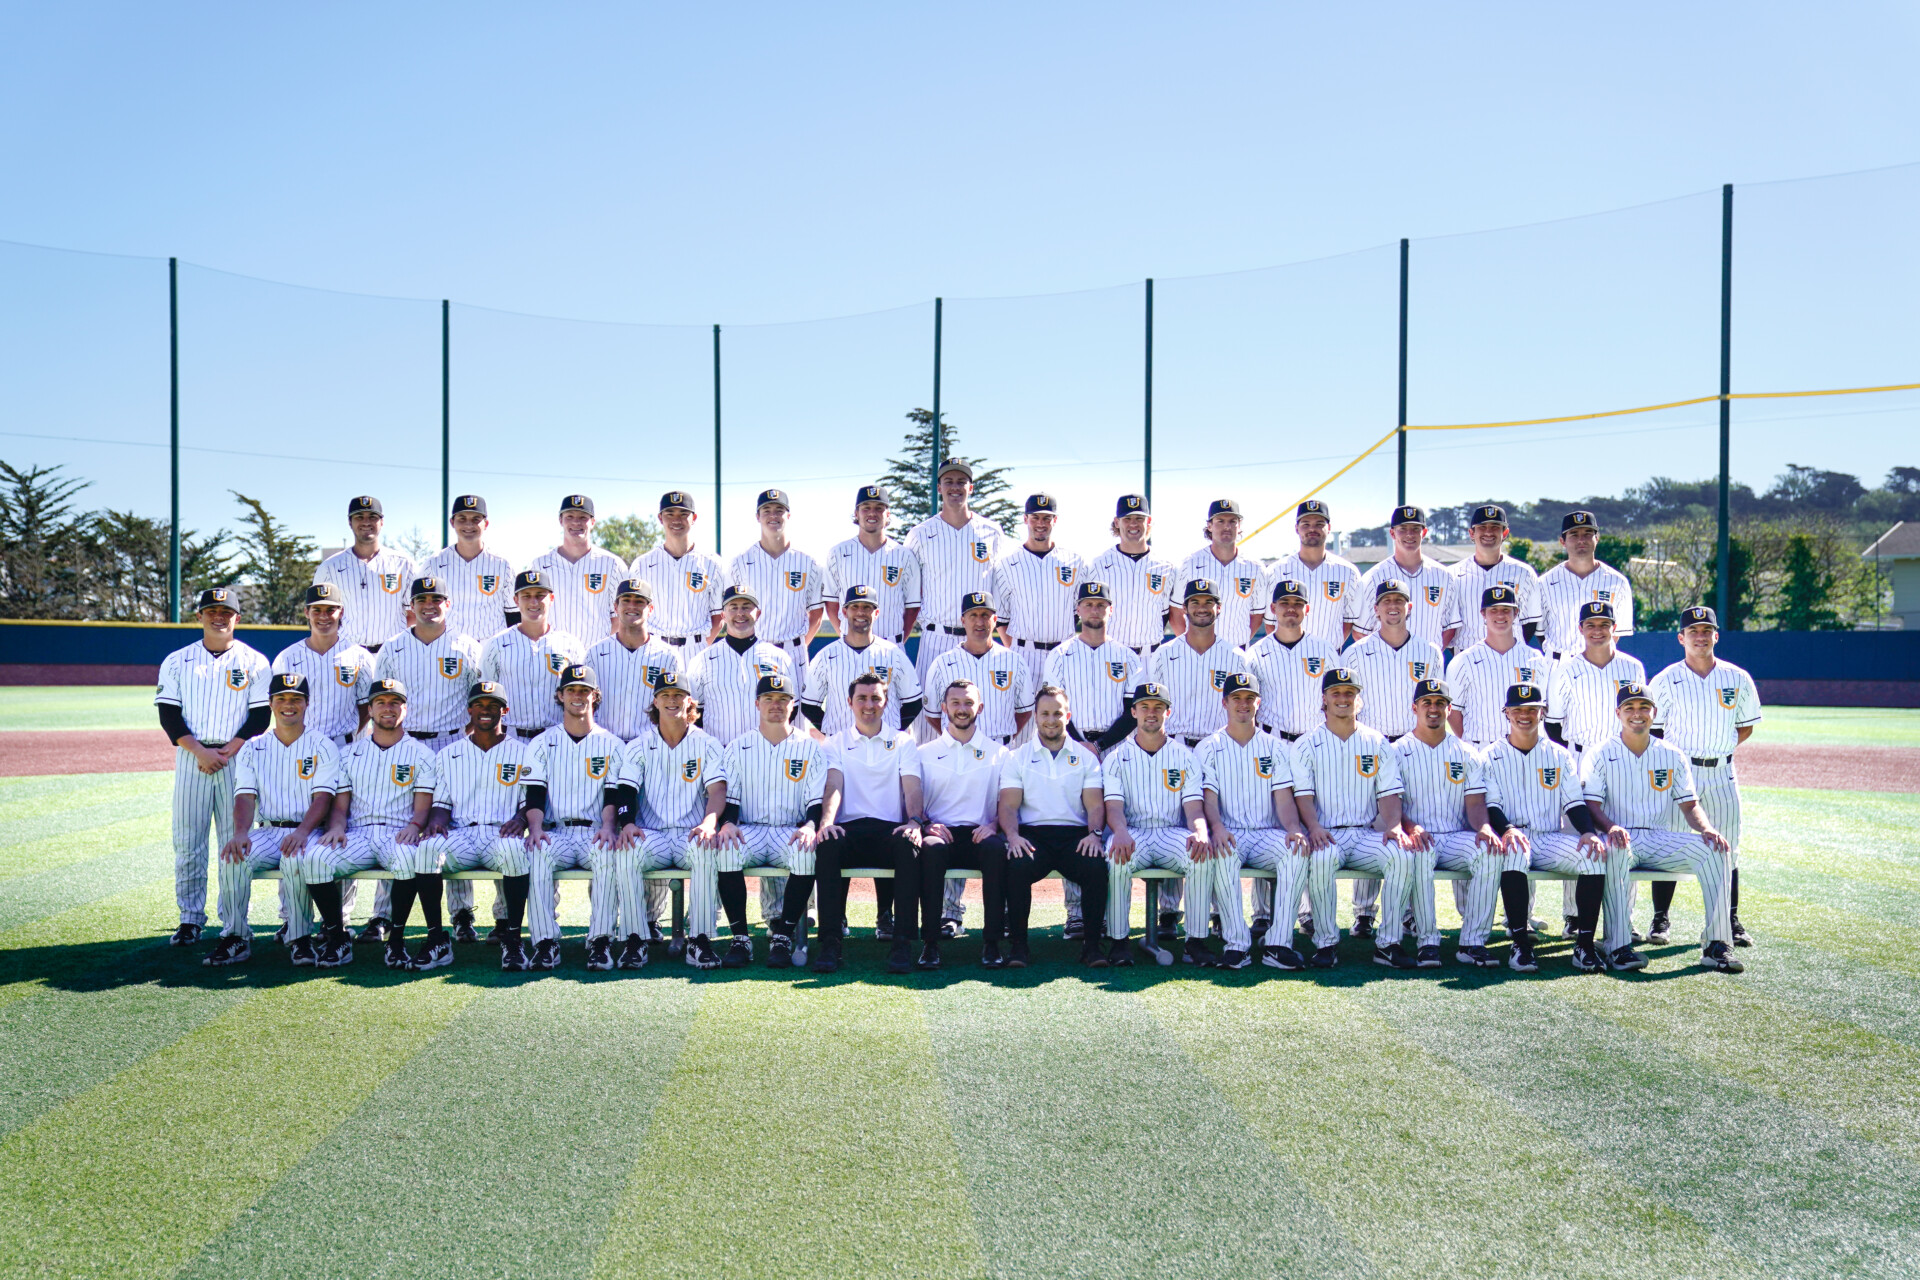 Team photo of the USF baseball team.